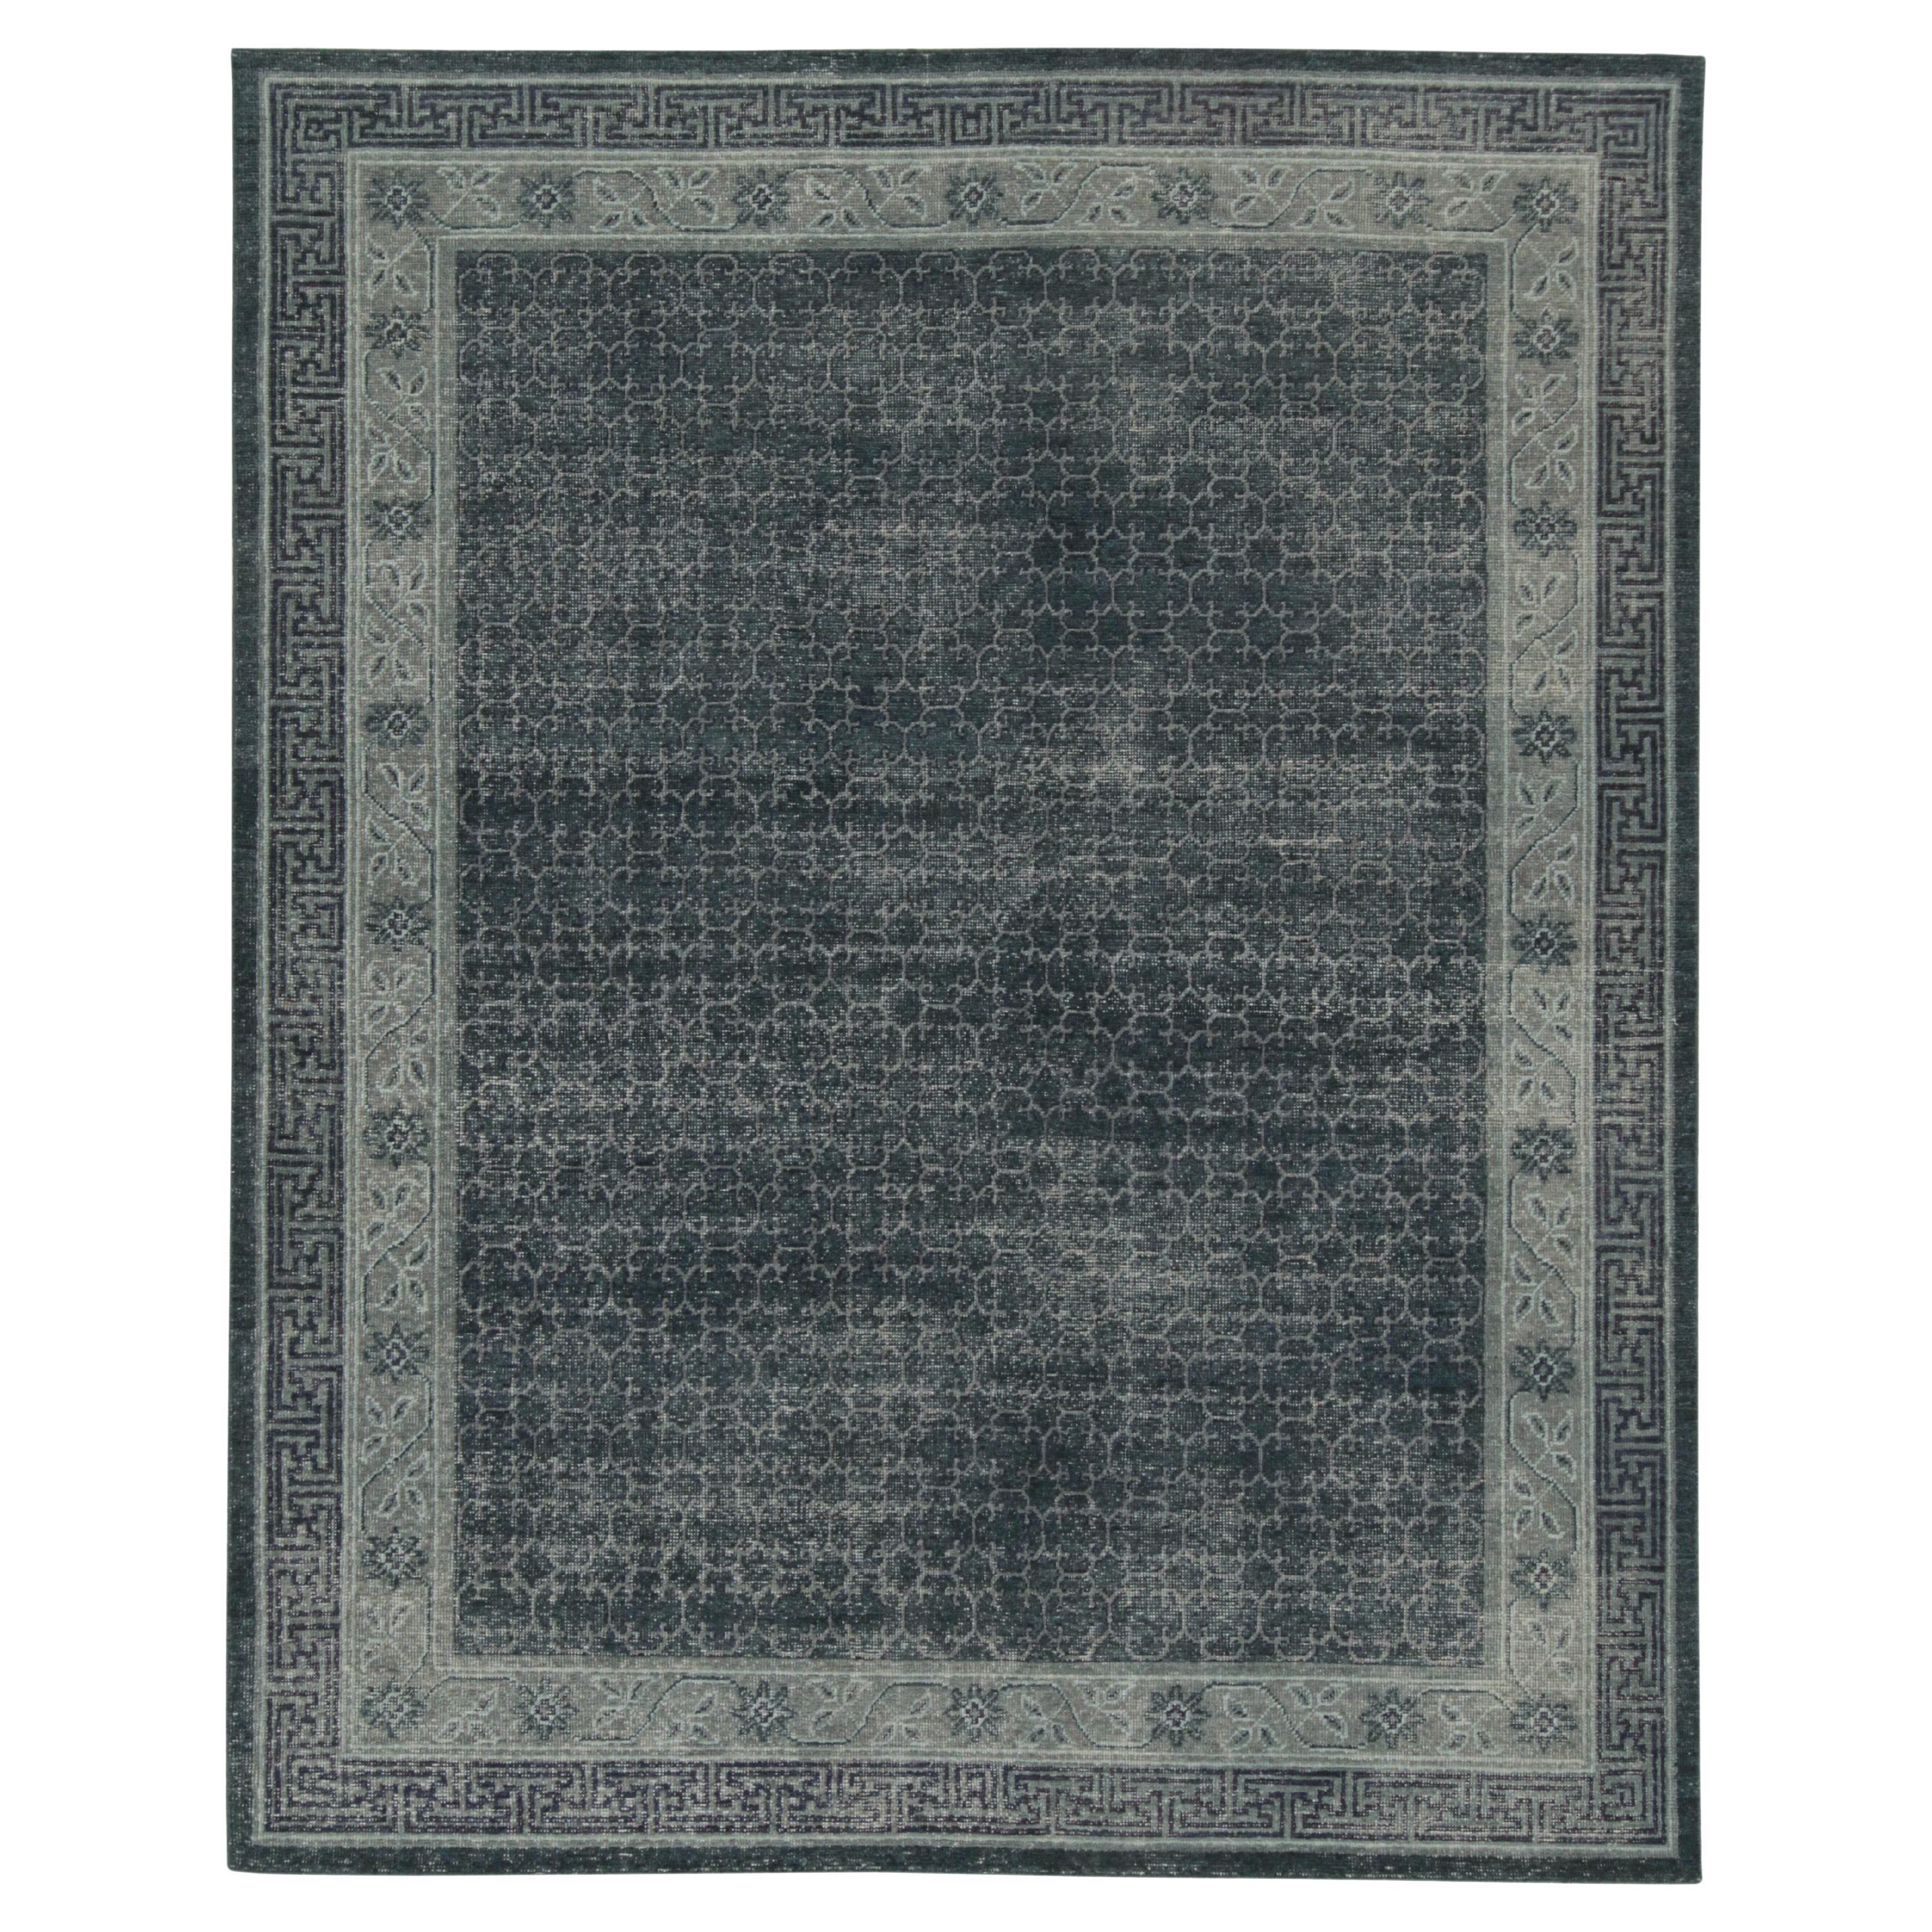 Rug & Kilim’s Distressed Khotan style rug in Blue & Gray Geometric Patterns